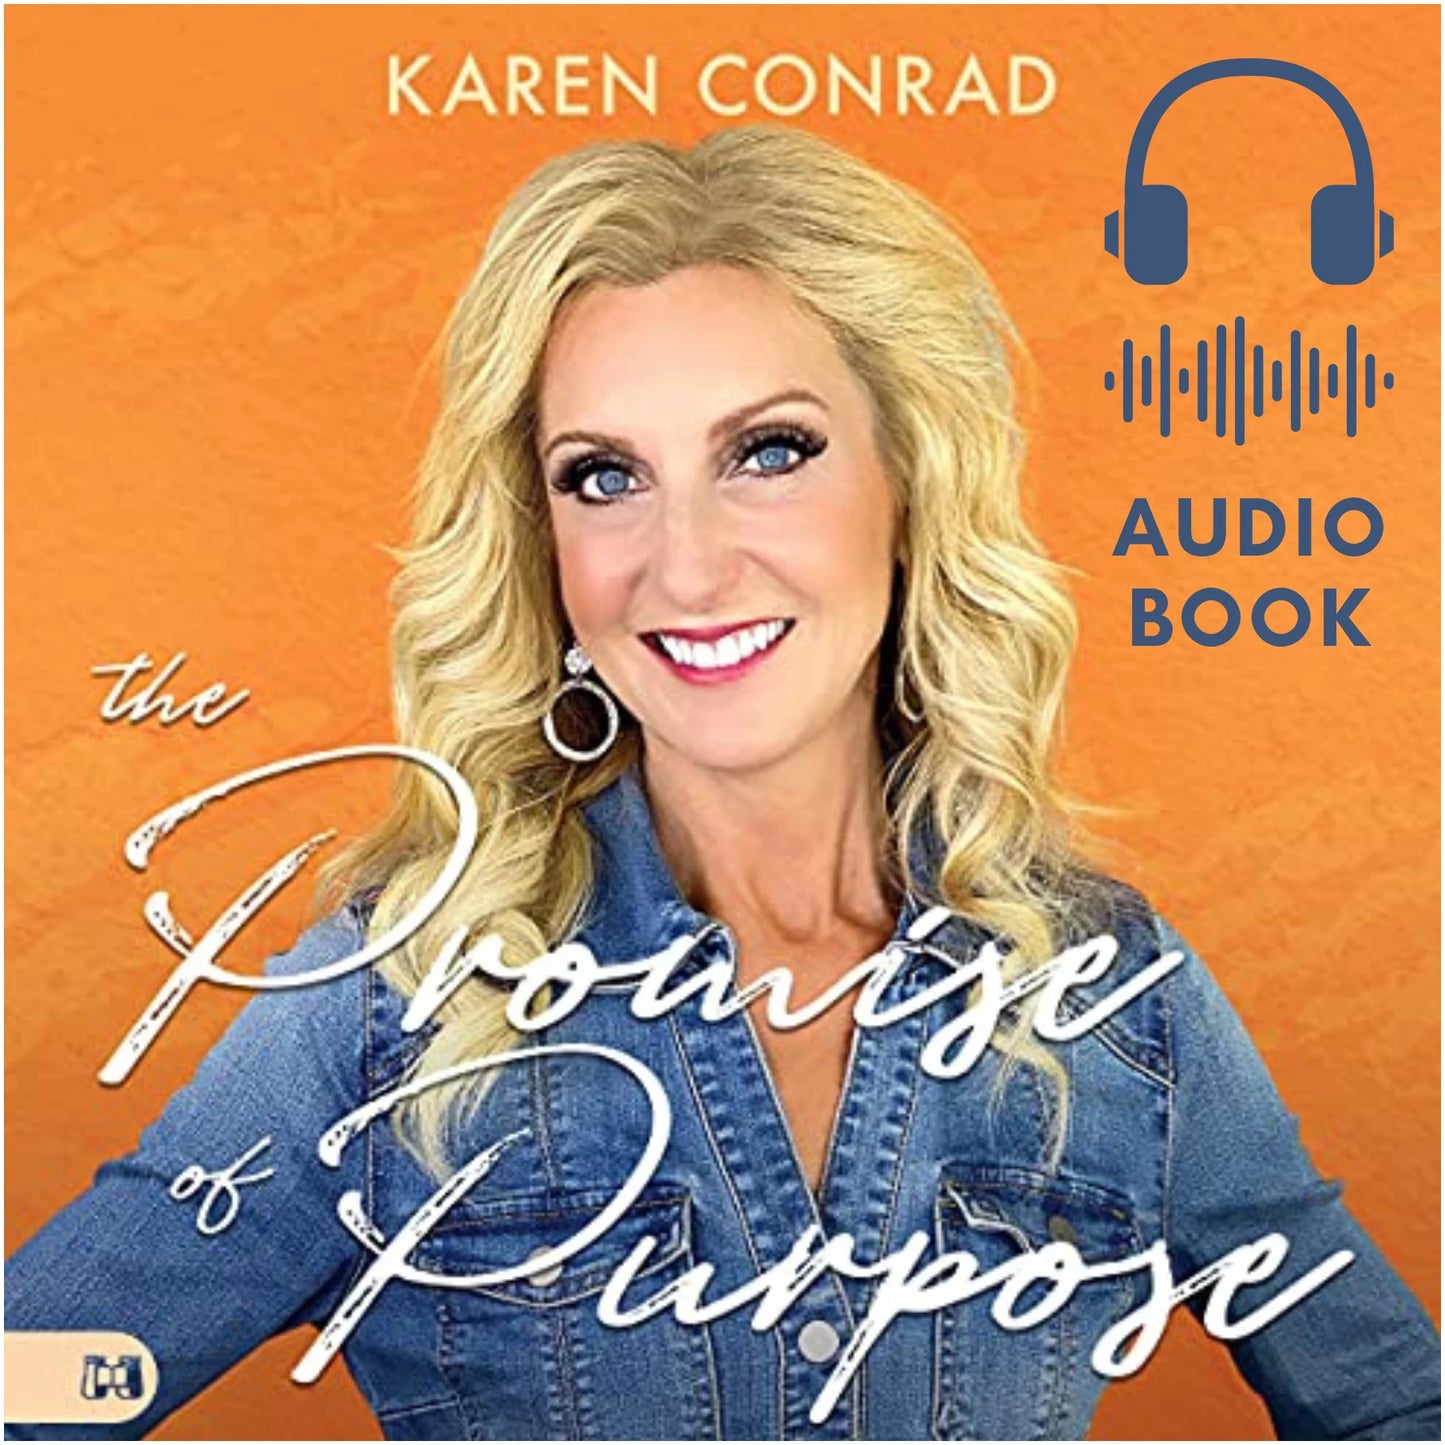 The Promise of Purpose Audio Book